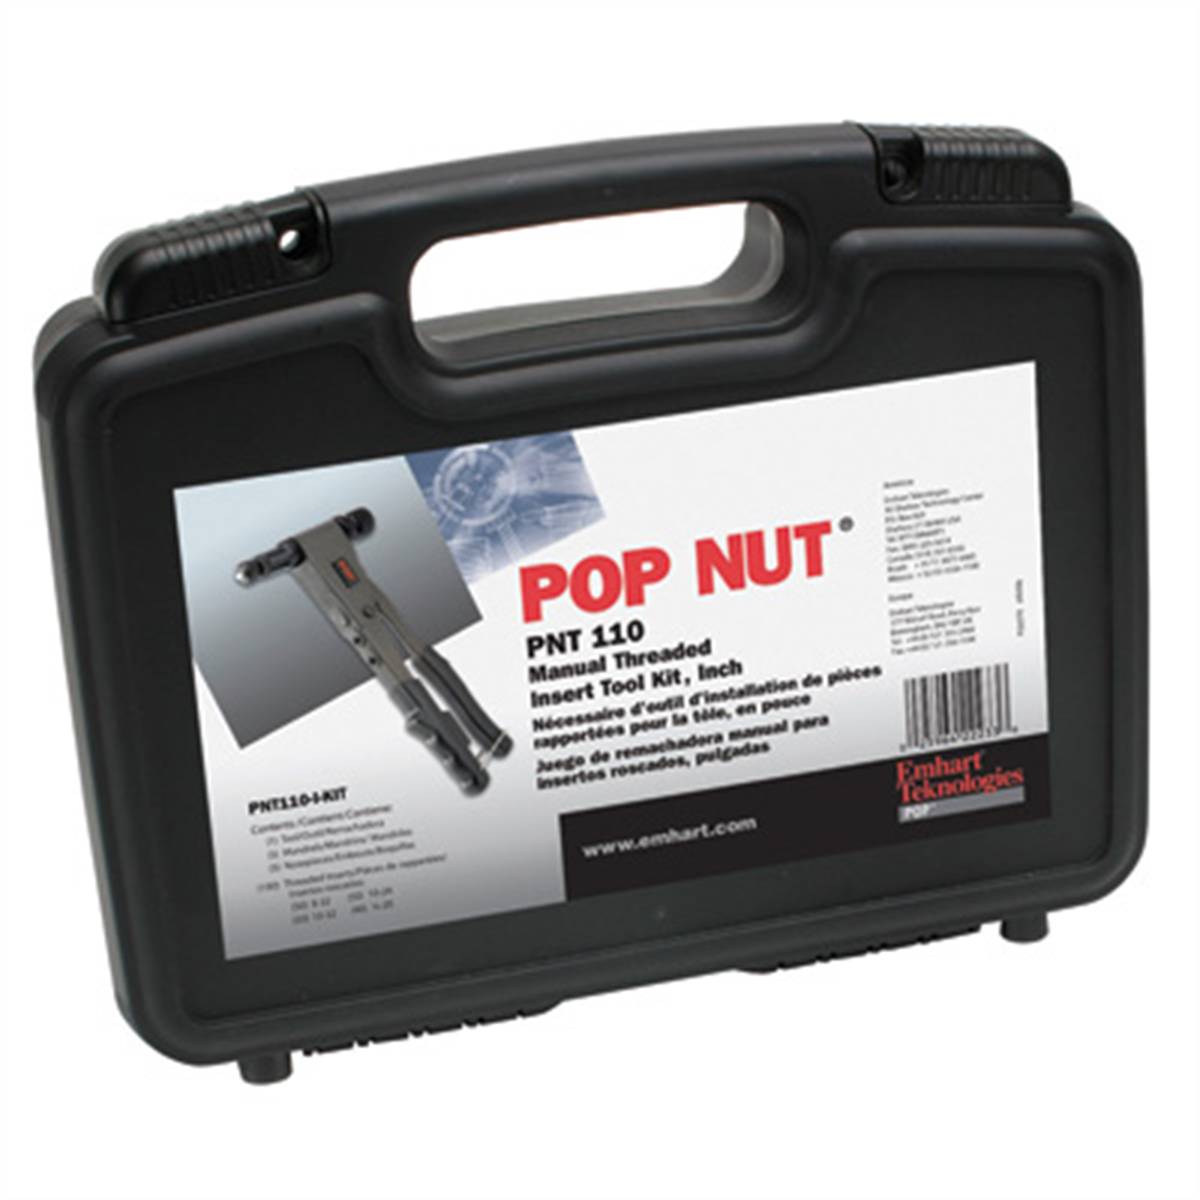 POP NUT Professional Manual Threaded Insert Tool K...